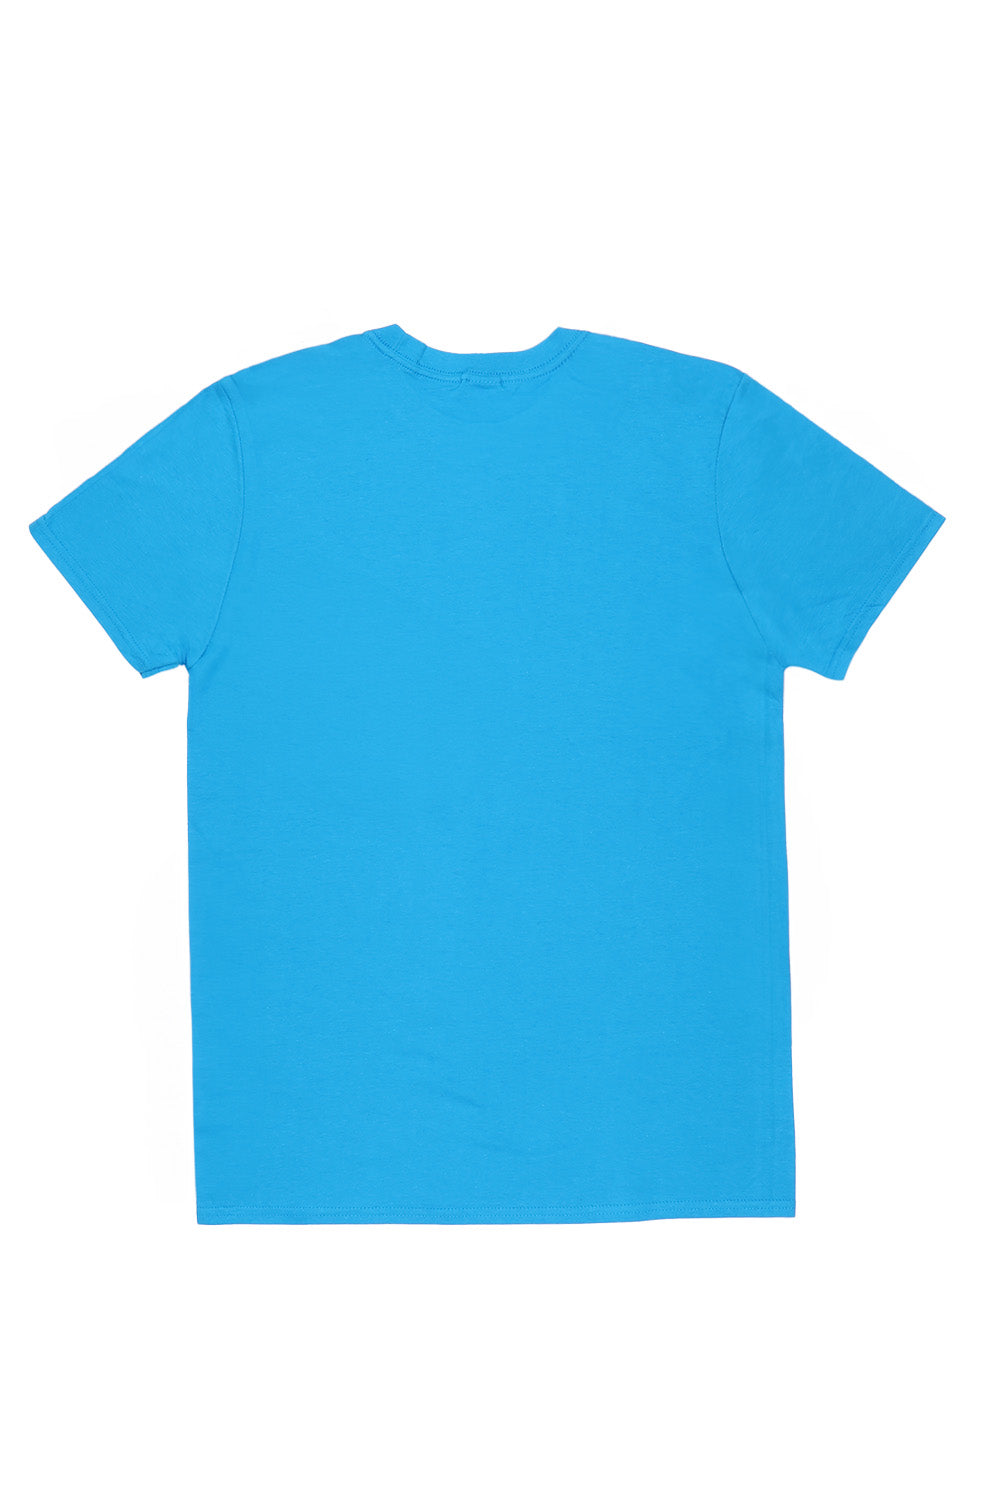 Beverly Hills T-Shirt in Sapphire Blue (Custom Packs)